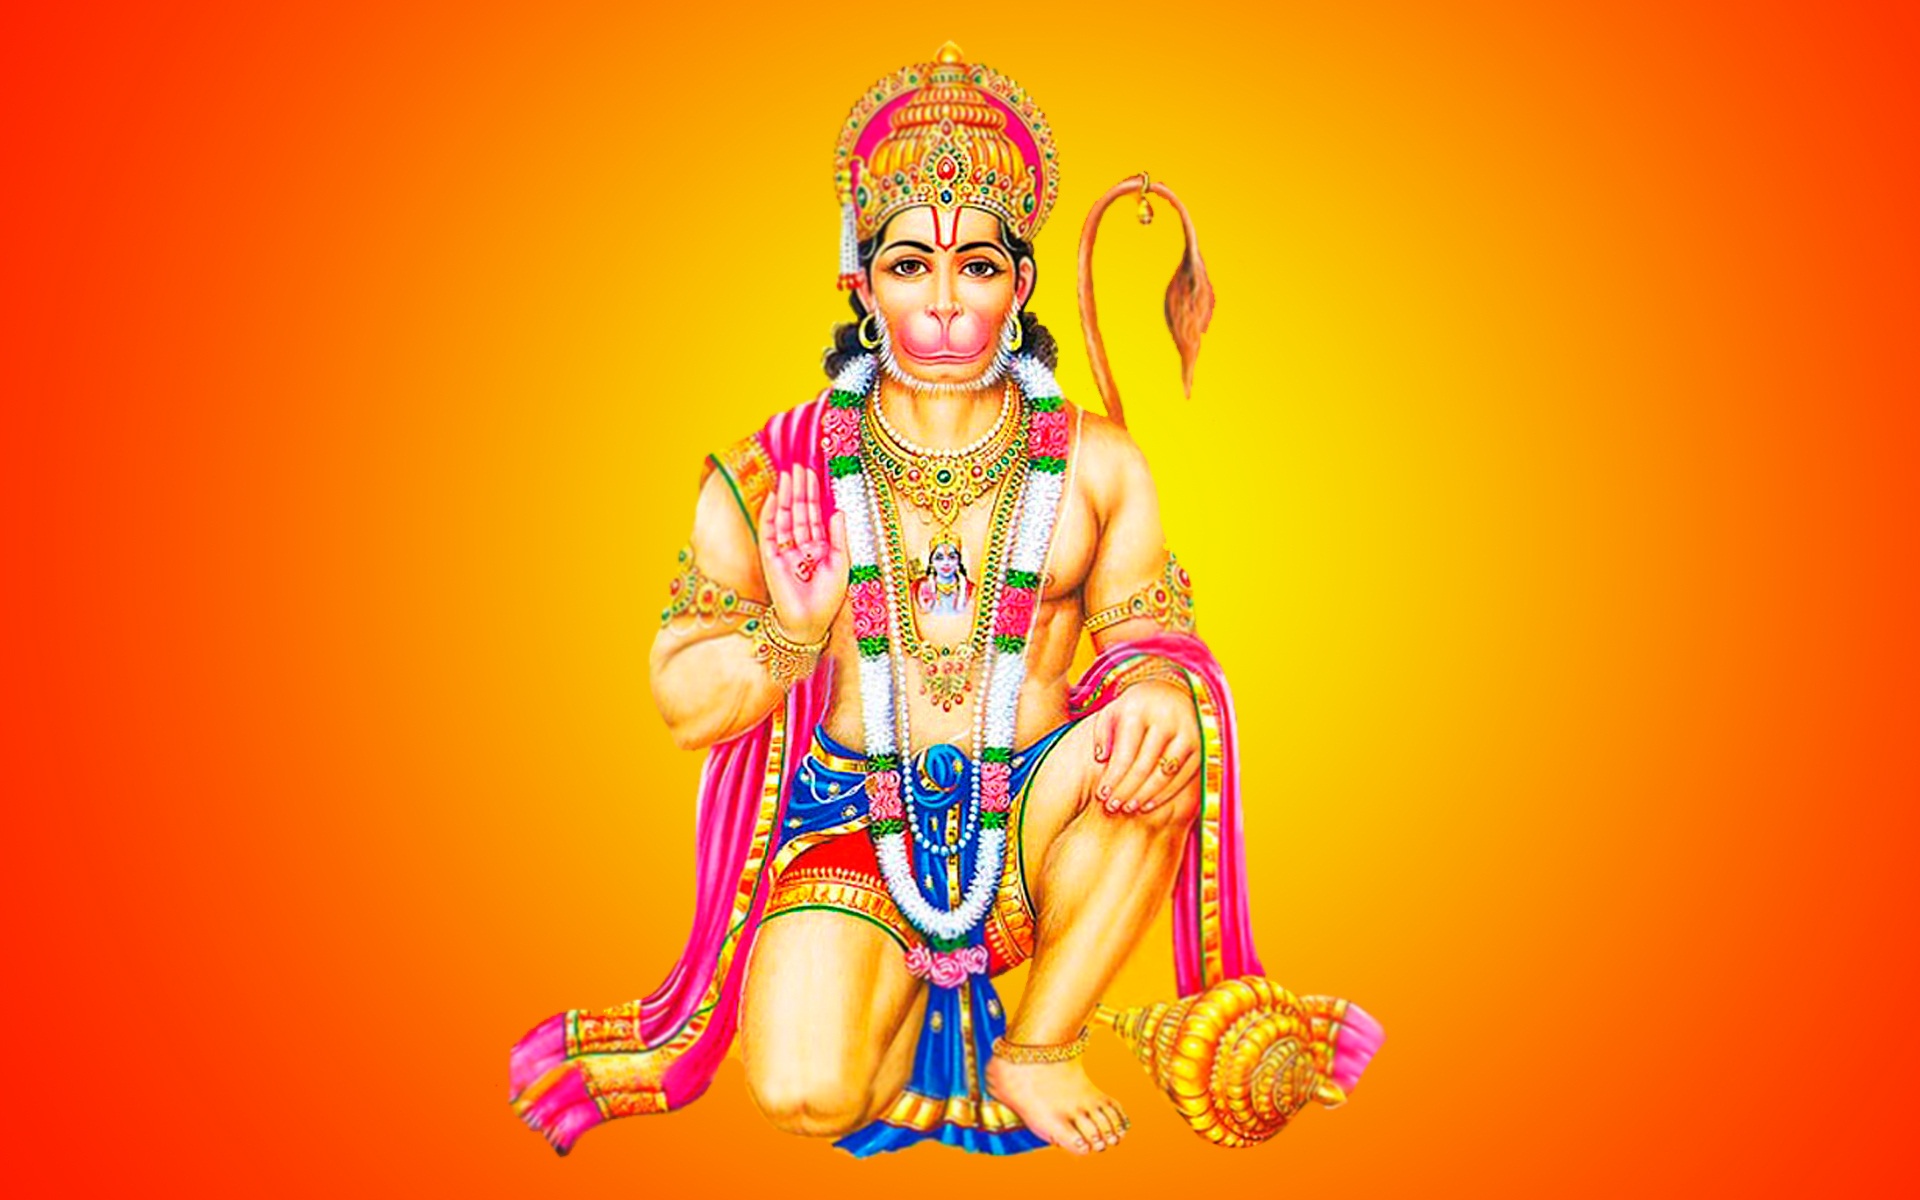 Lord Hanuman Meditation iPhone Wallpaper - iPhone Wallpapers